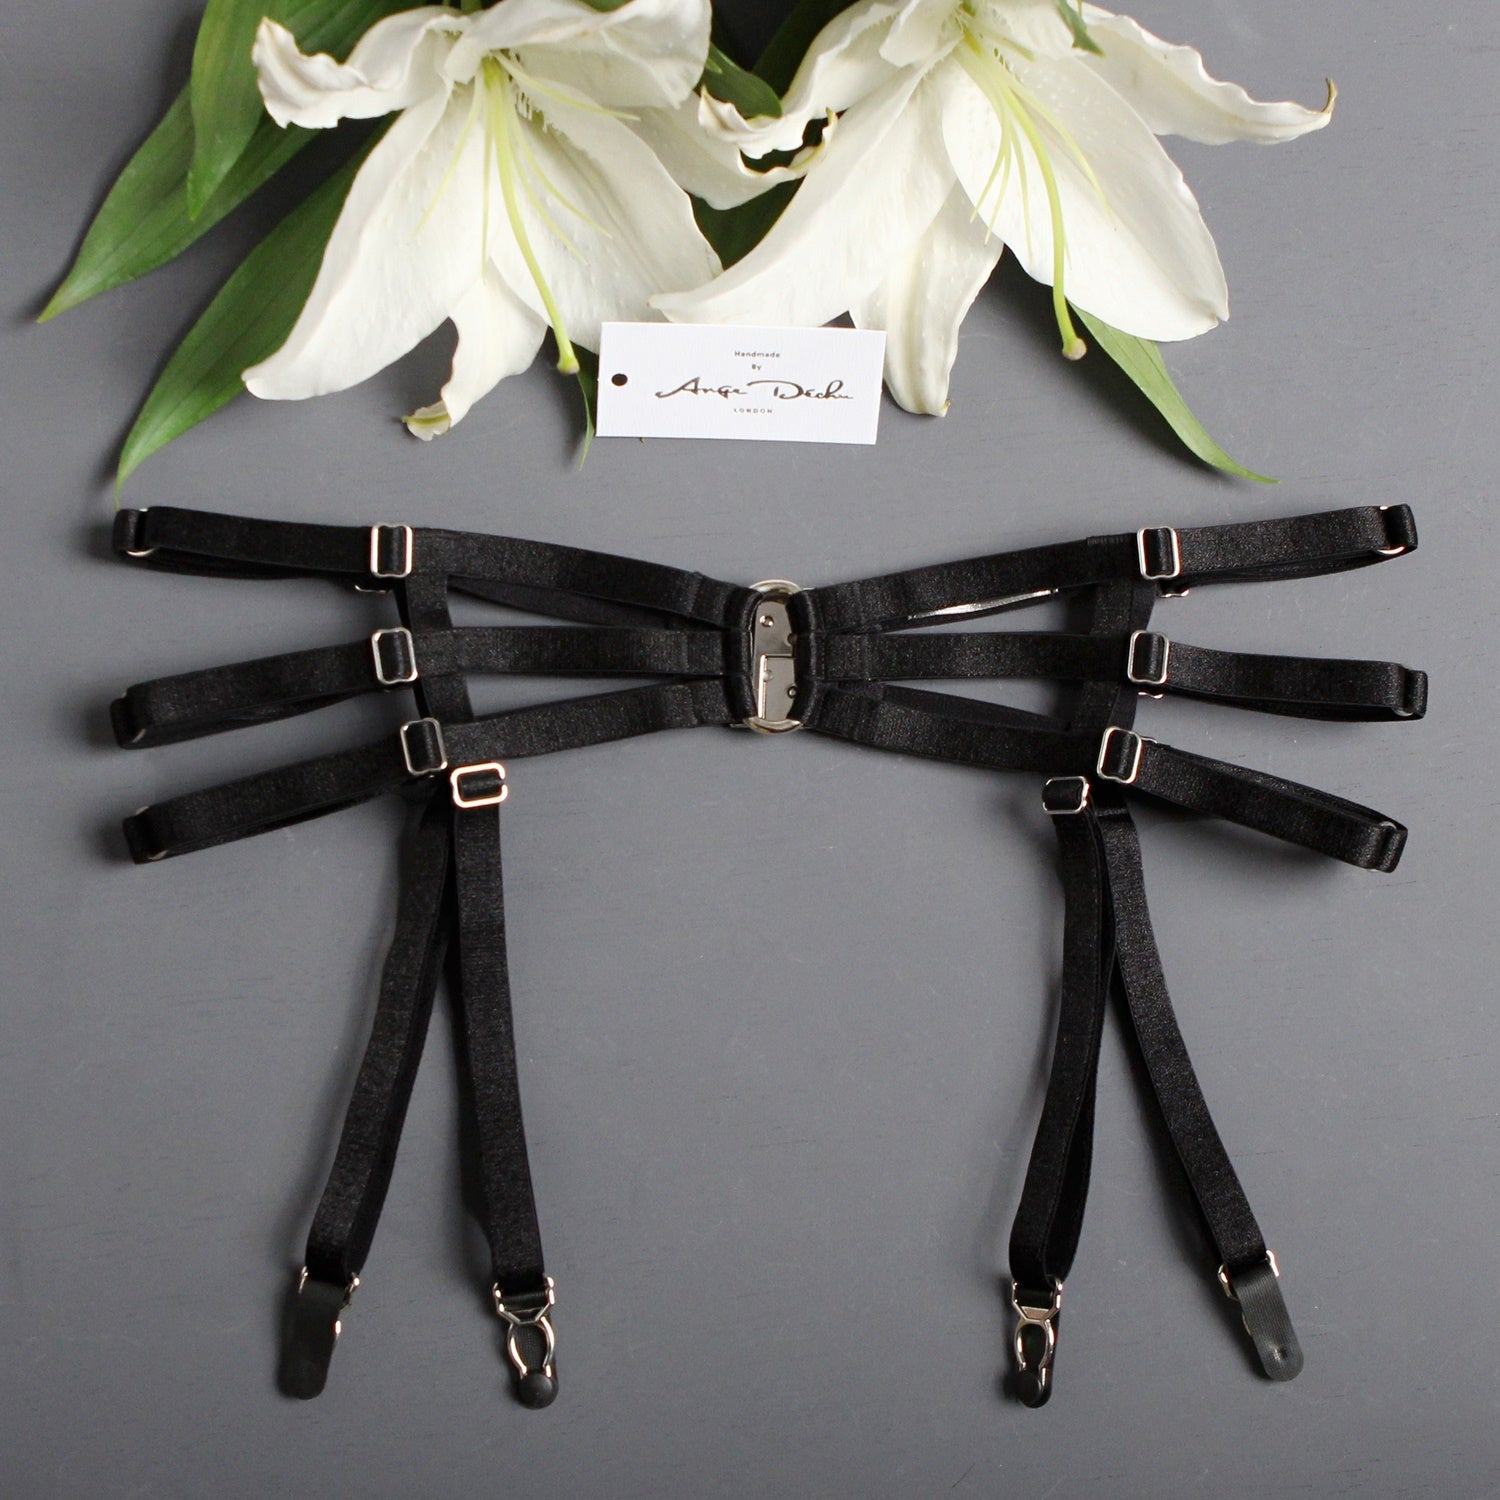 Black suspender belt sexy lingerie strappy suspender belt harness waist belt dancewear outfit by Ange Dechu - Ange Déchu